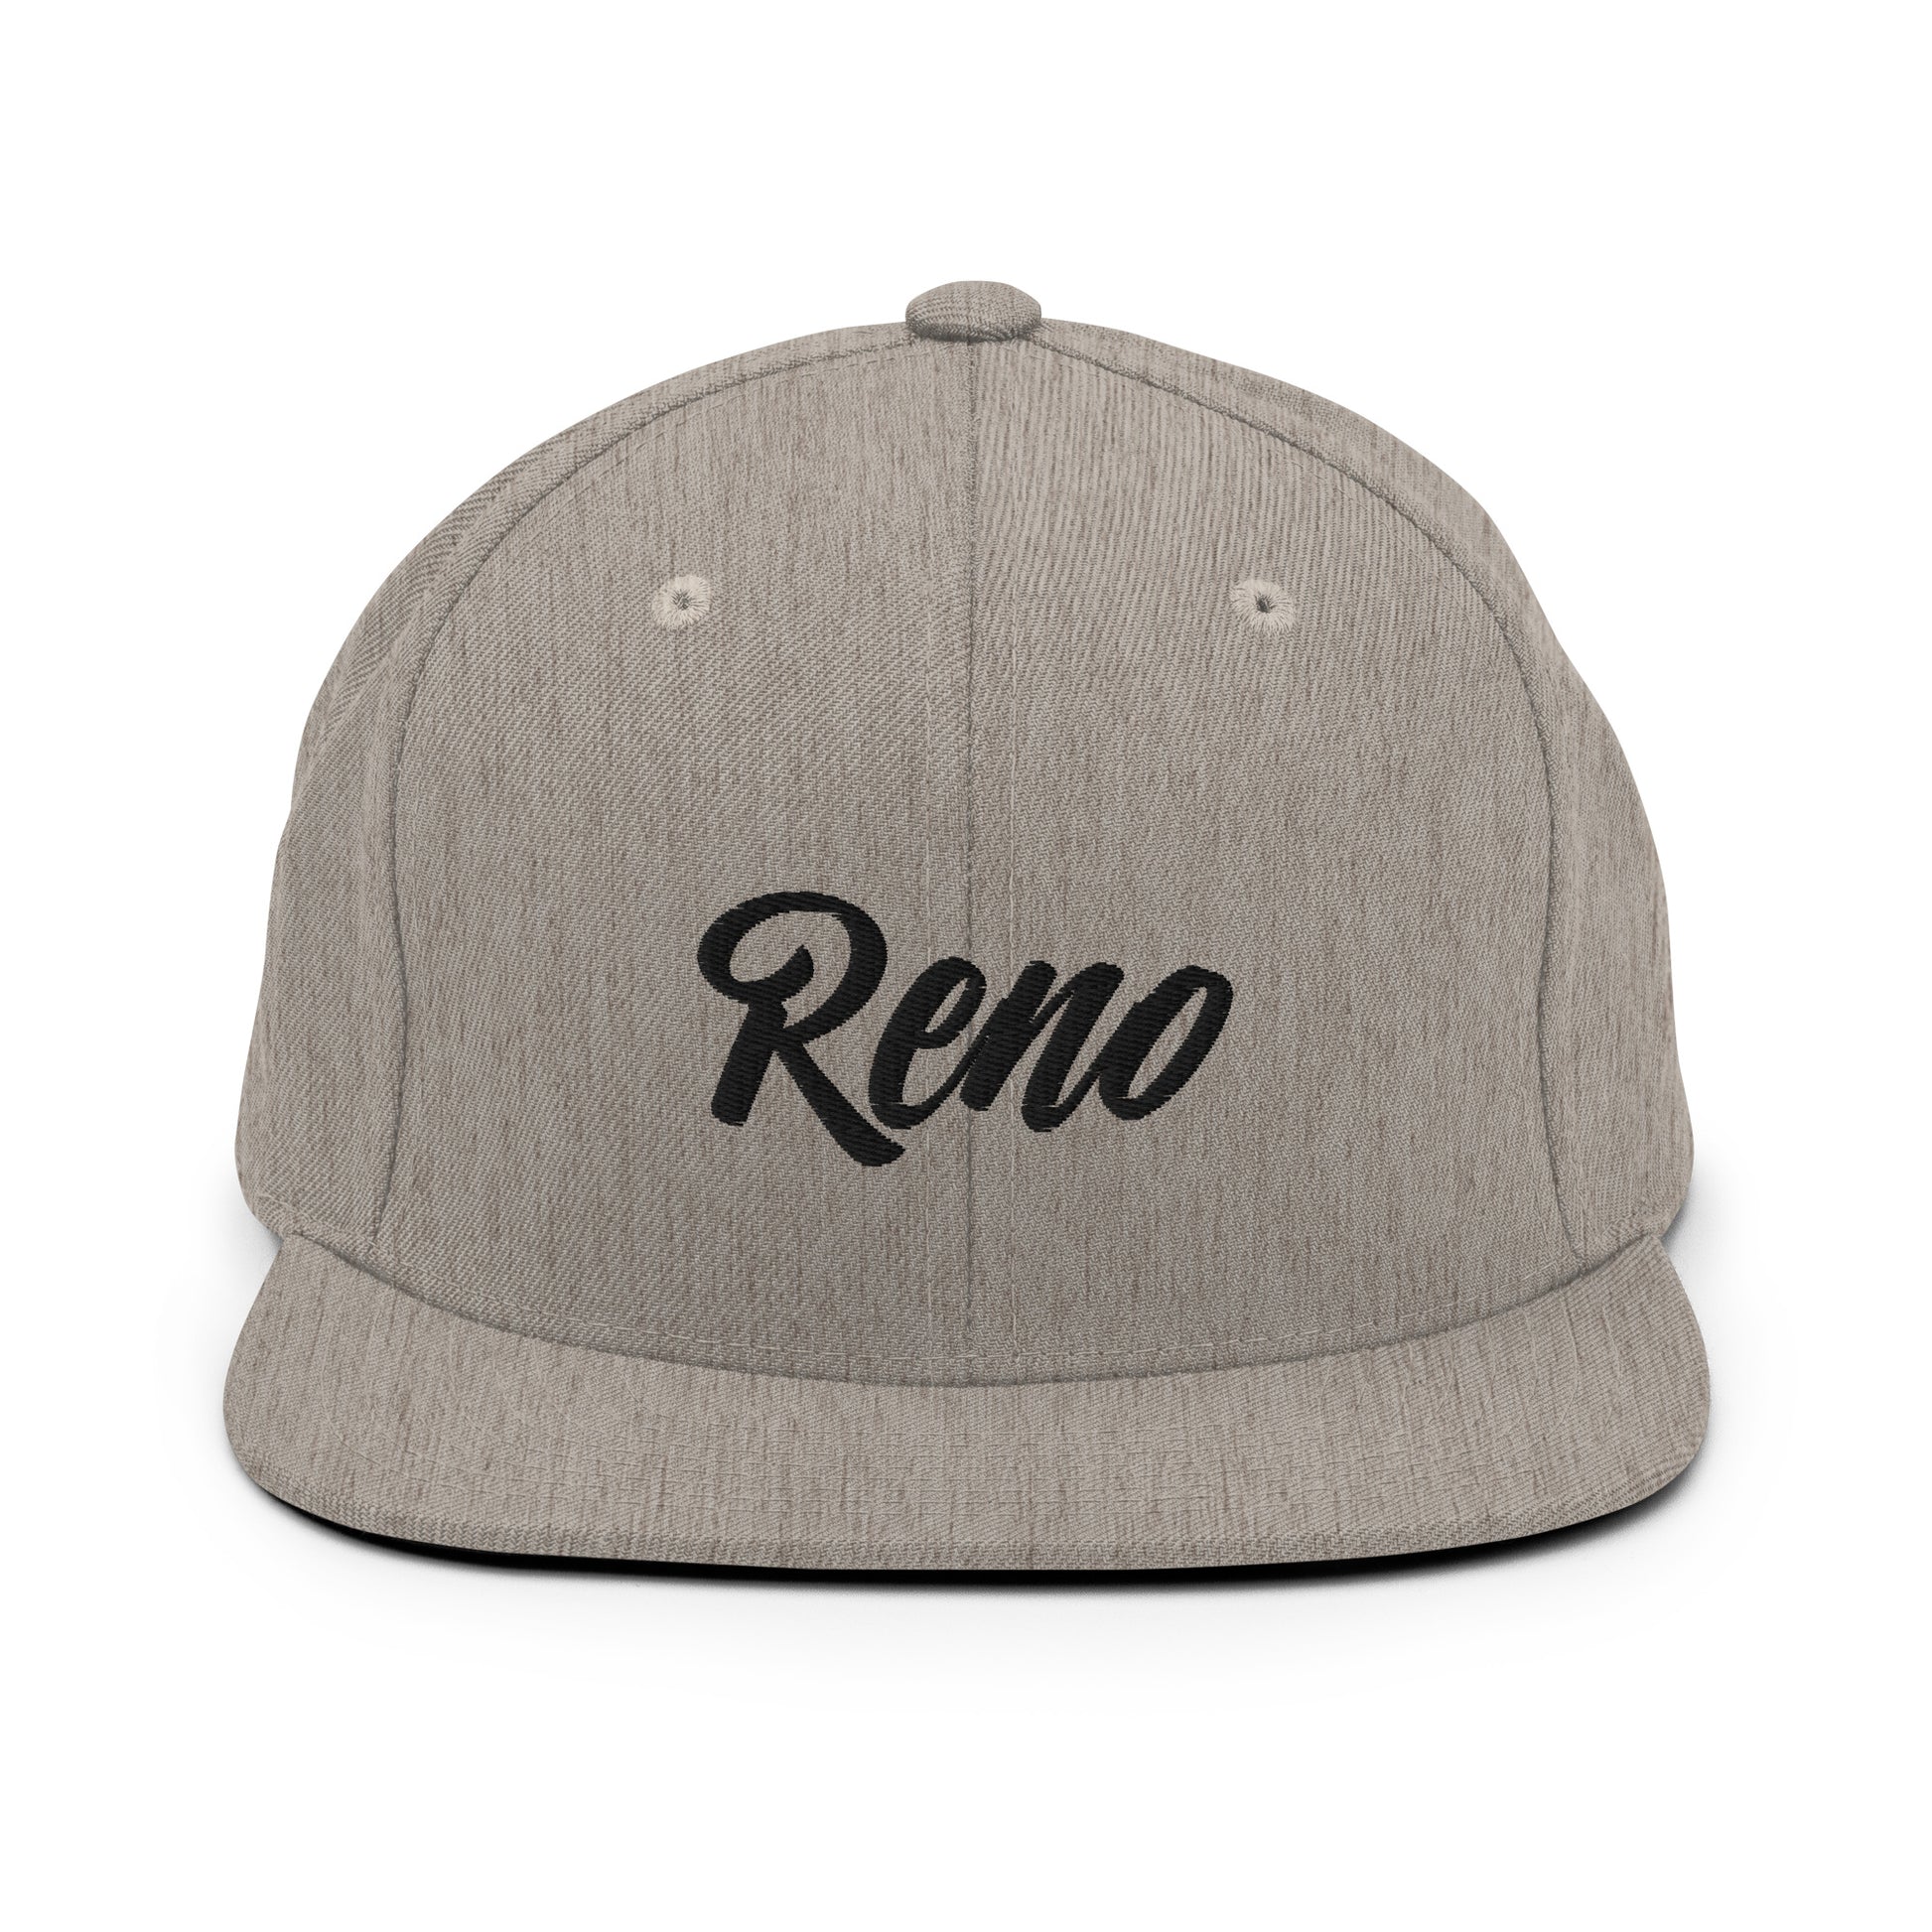 Reno Snapback Hat 11